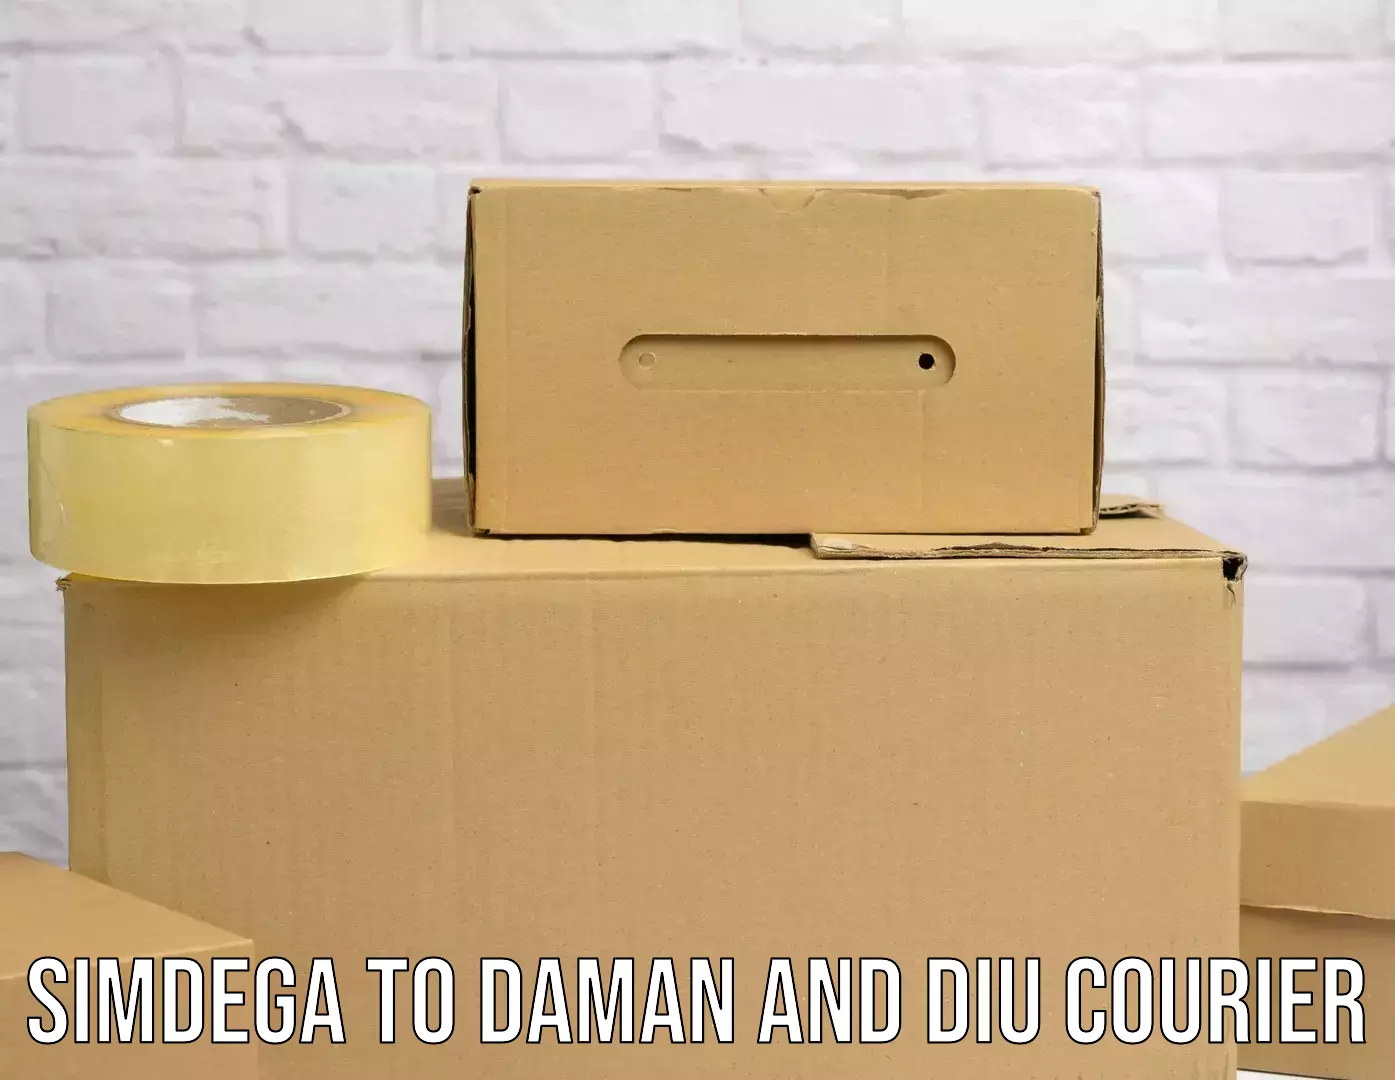 Logistics service provider Simdega to Daman and Diu